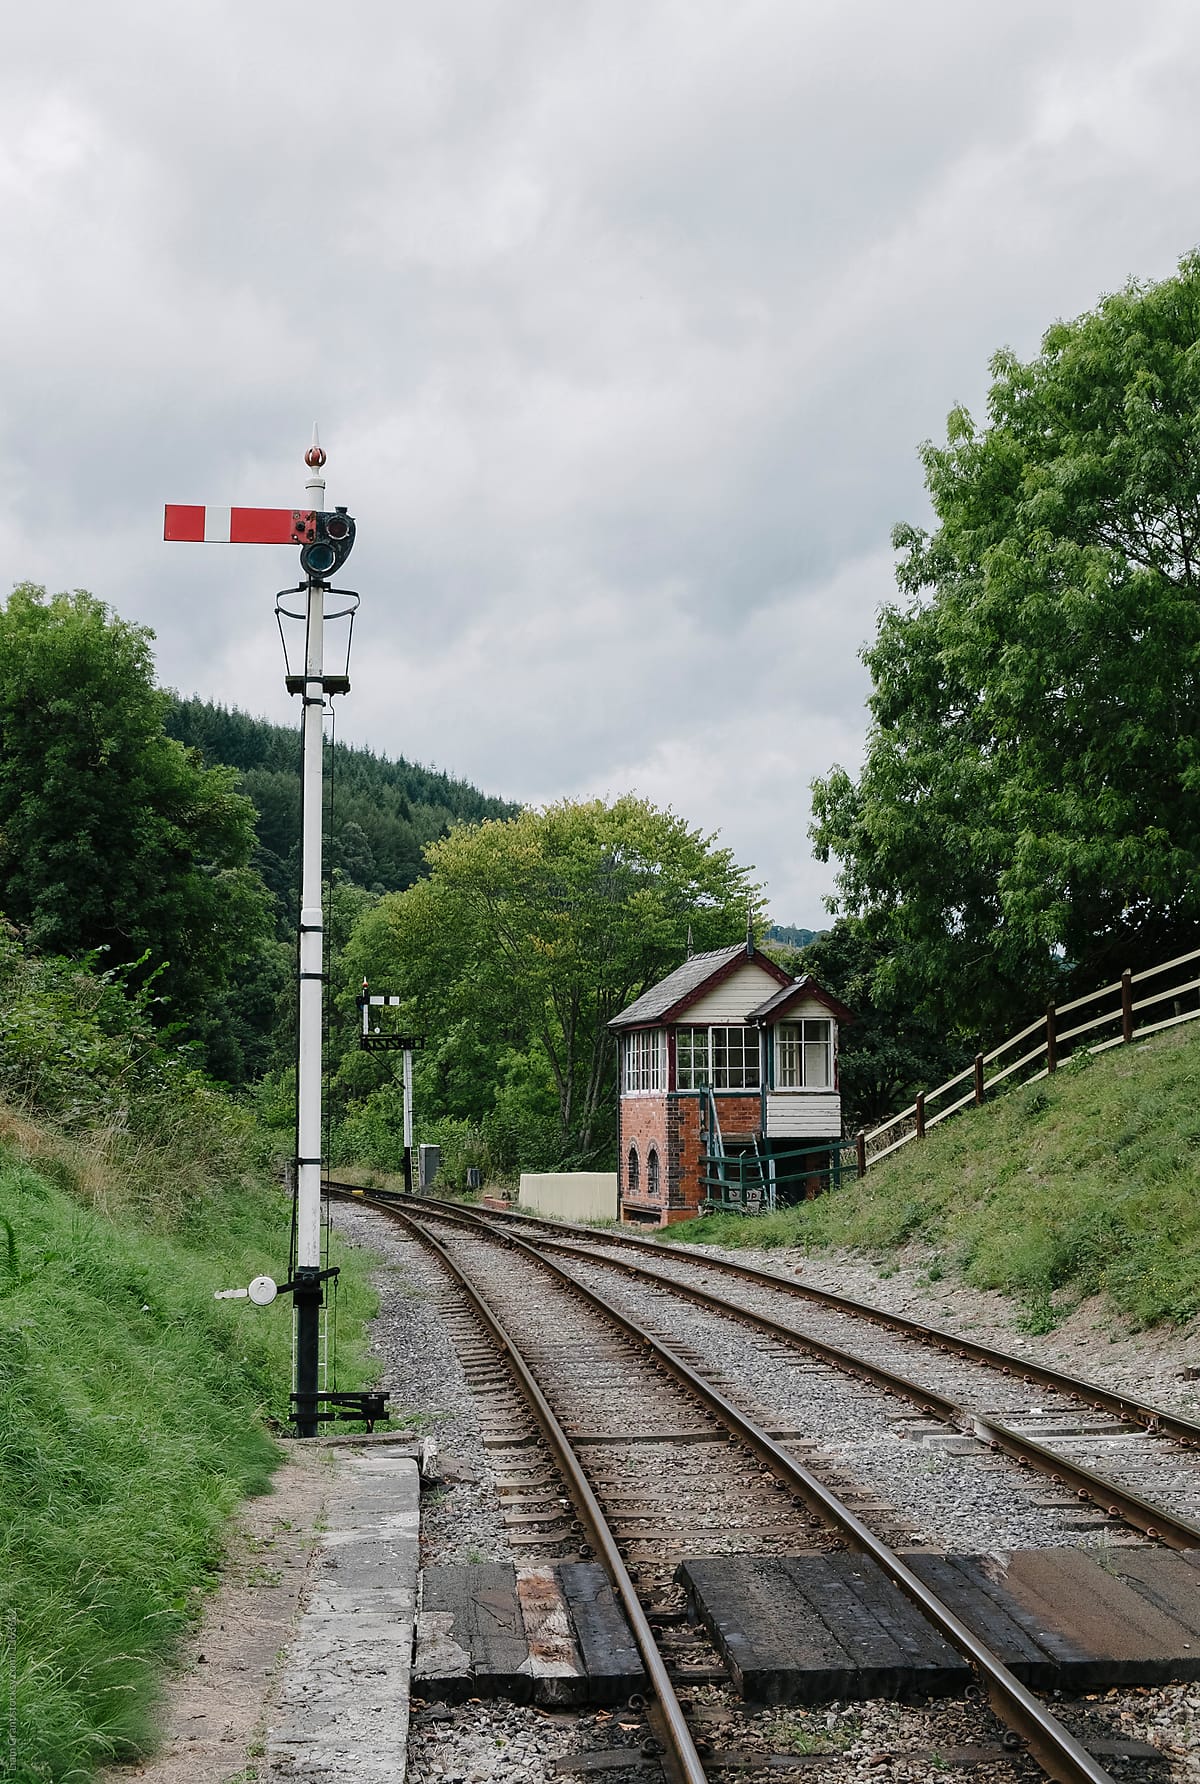 Signal box on a heritage railway line. Wales, UK.